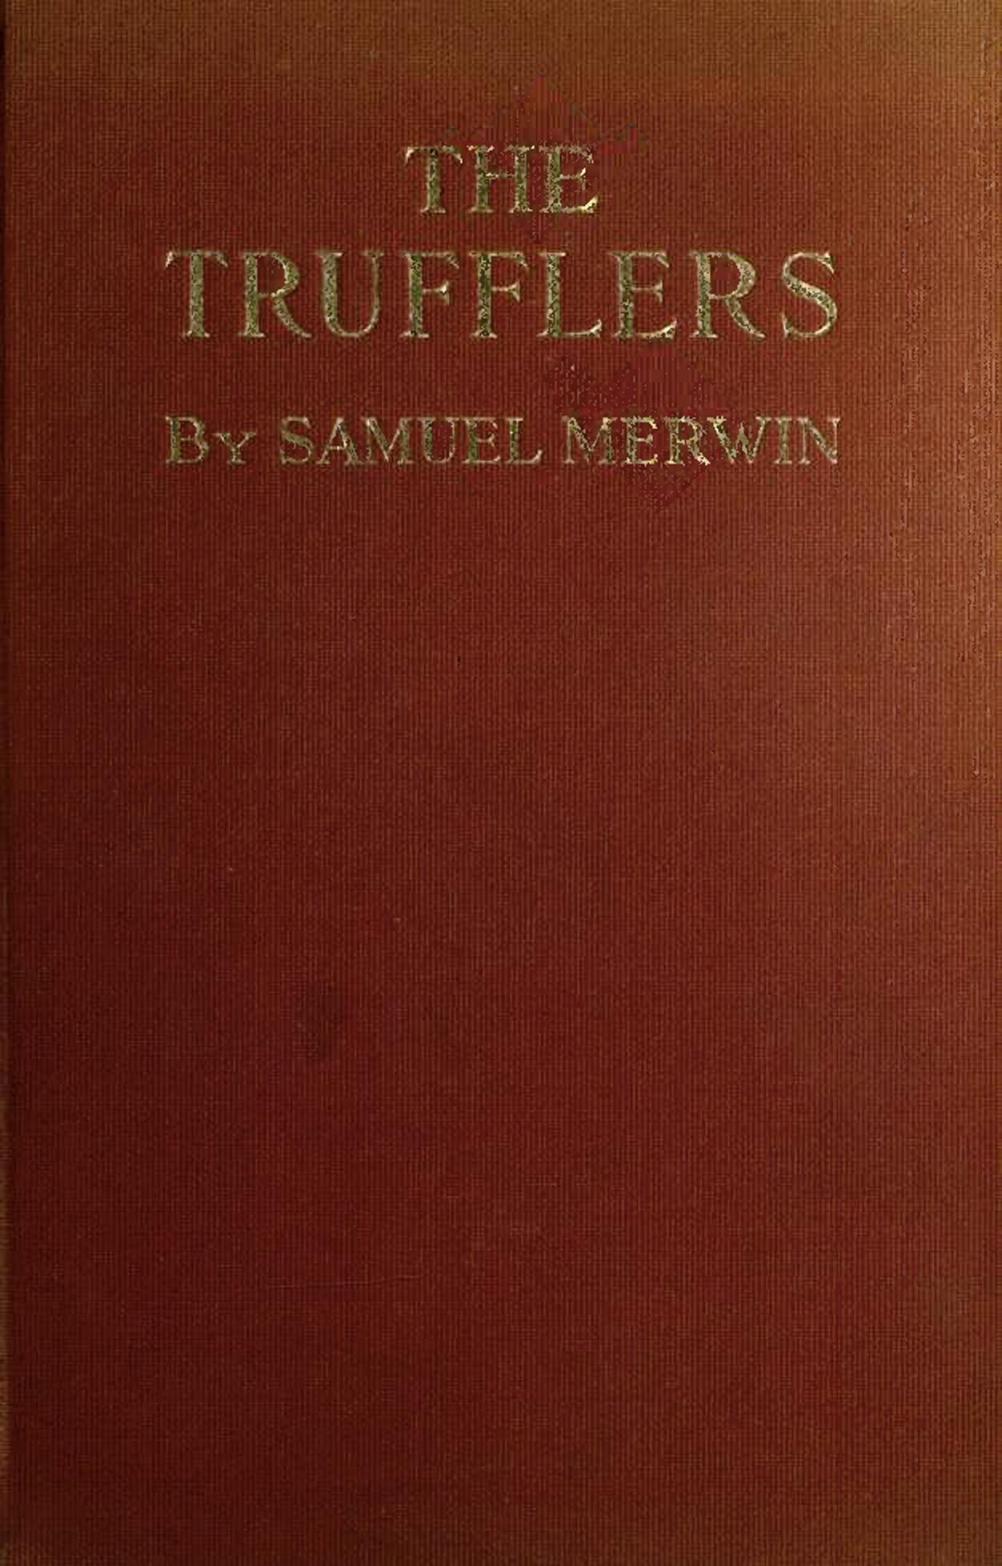 The Trufflers By Samuel Merwin